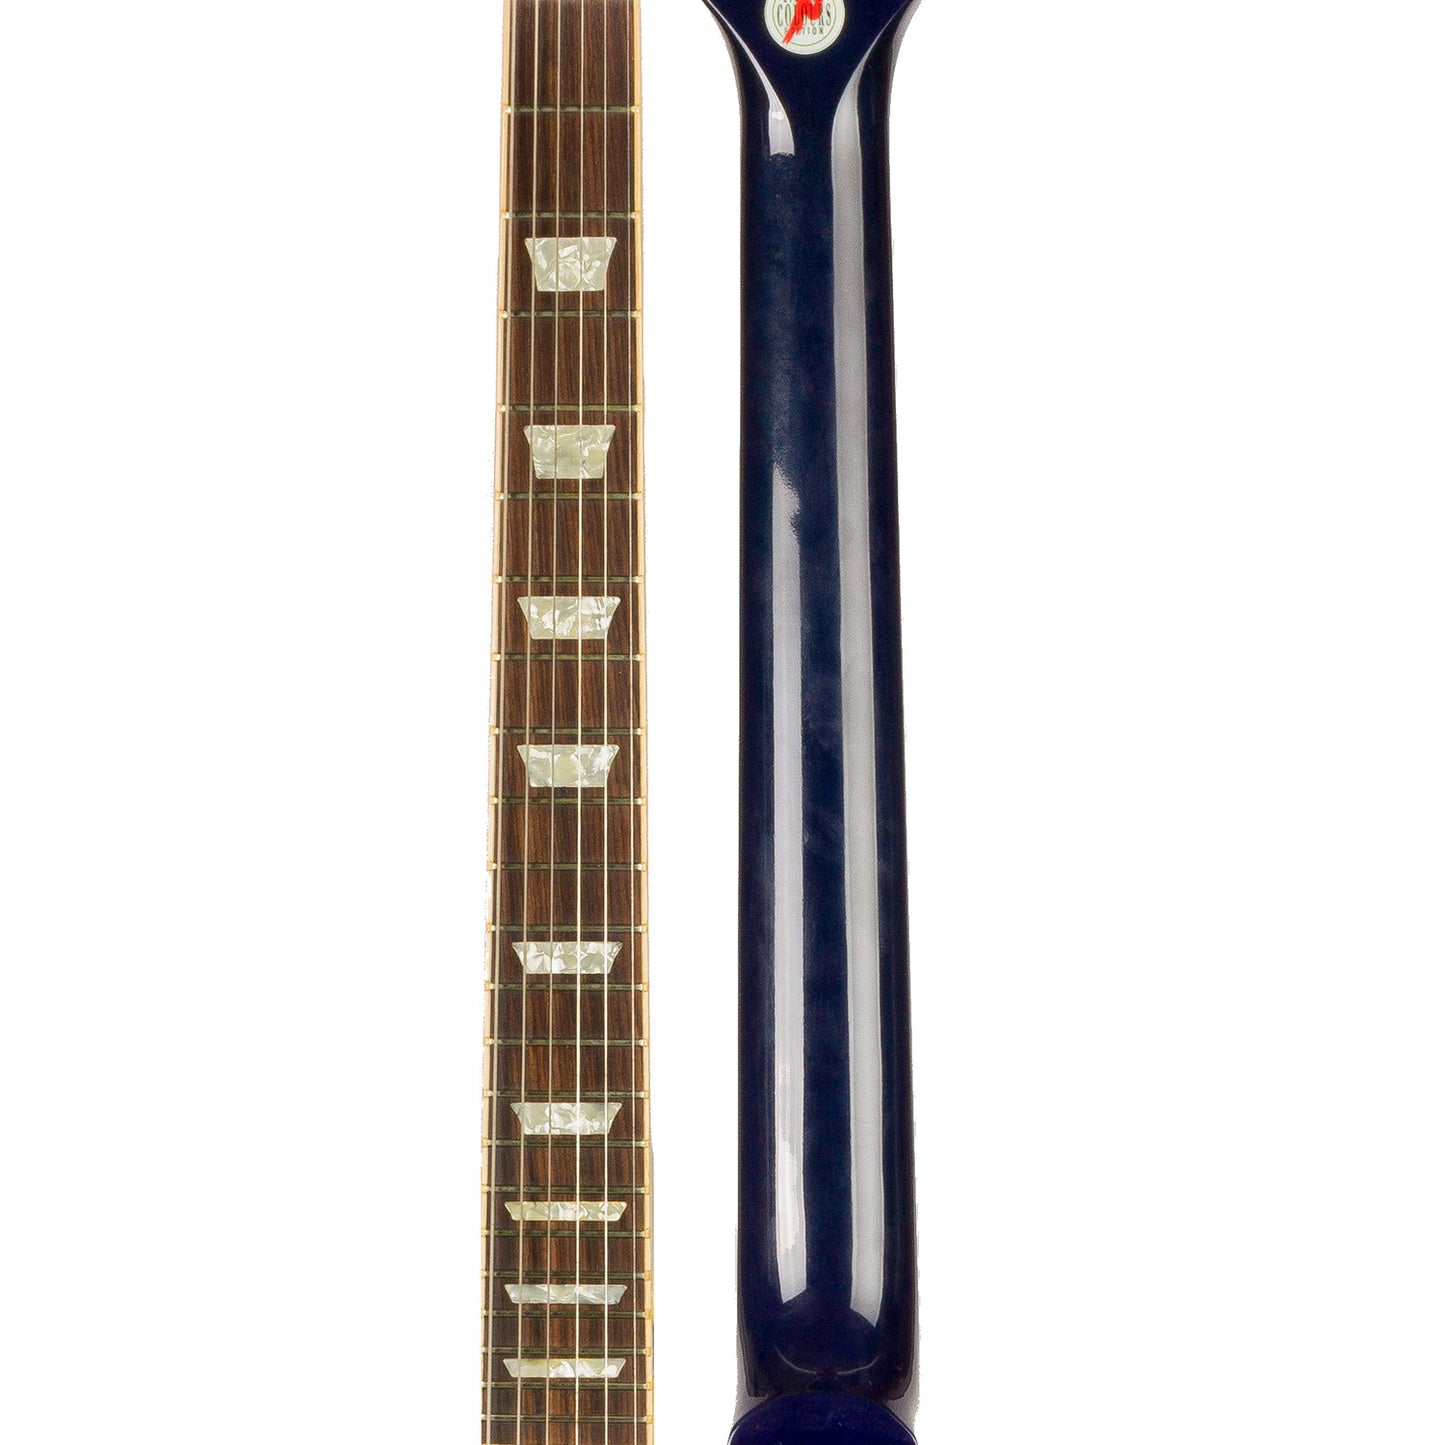 1990 Gibson Les Paul Standard - Limited Color- Nos Blue